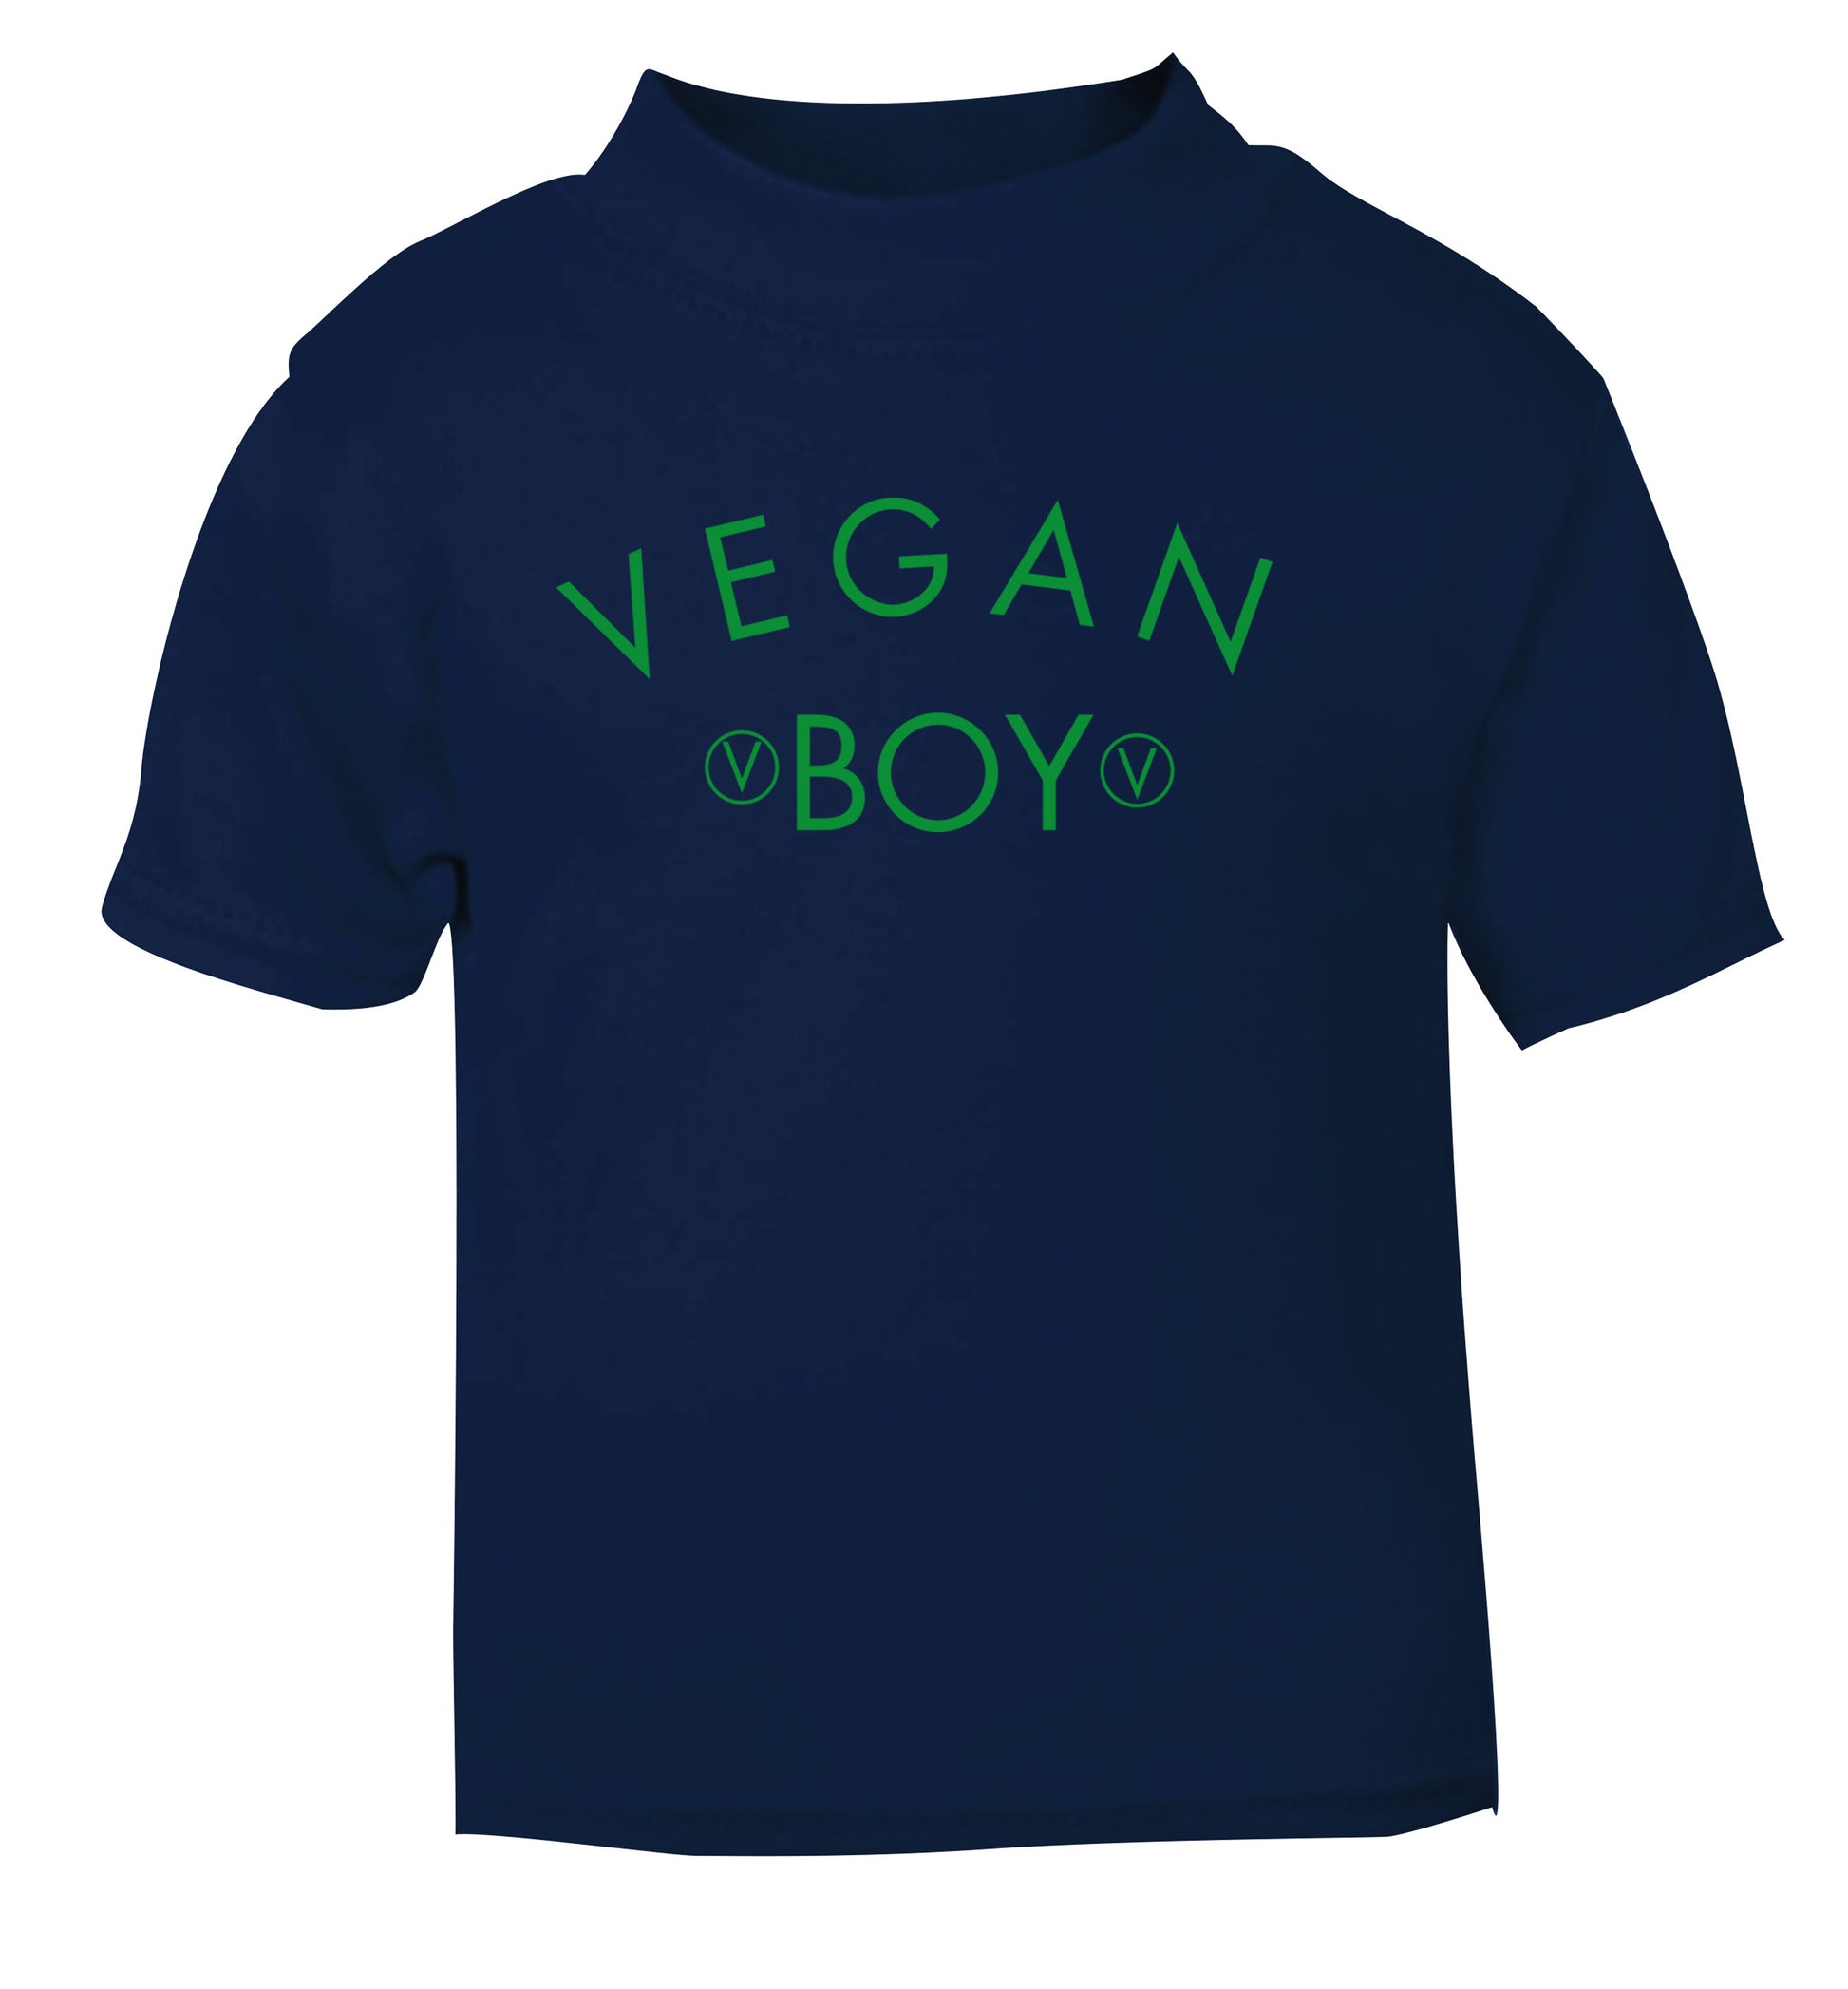 Vegan boy navy Baby Toddler Tshirt 2 Years